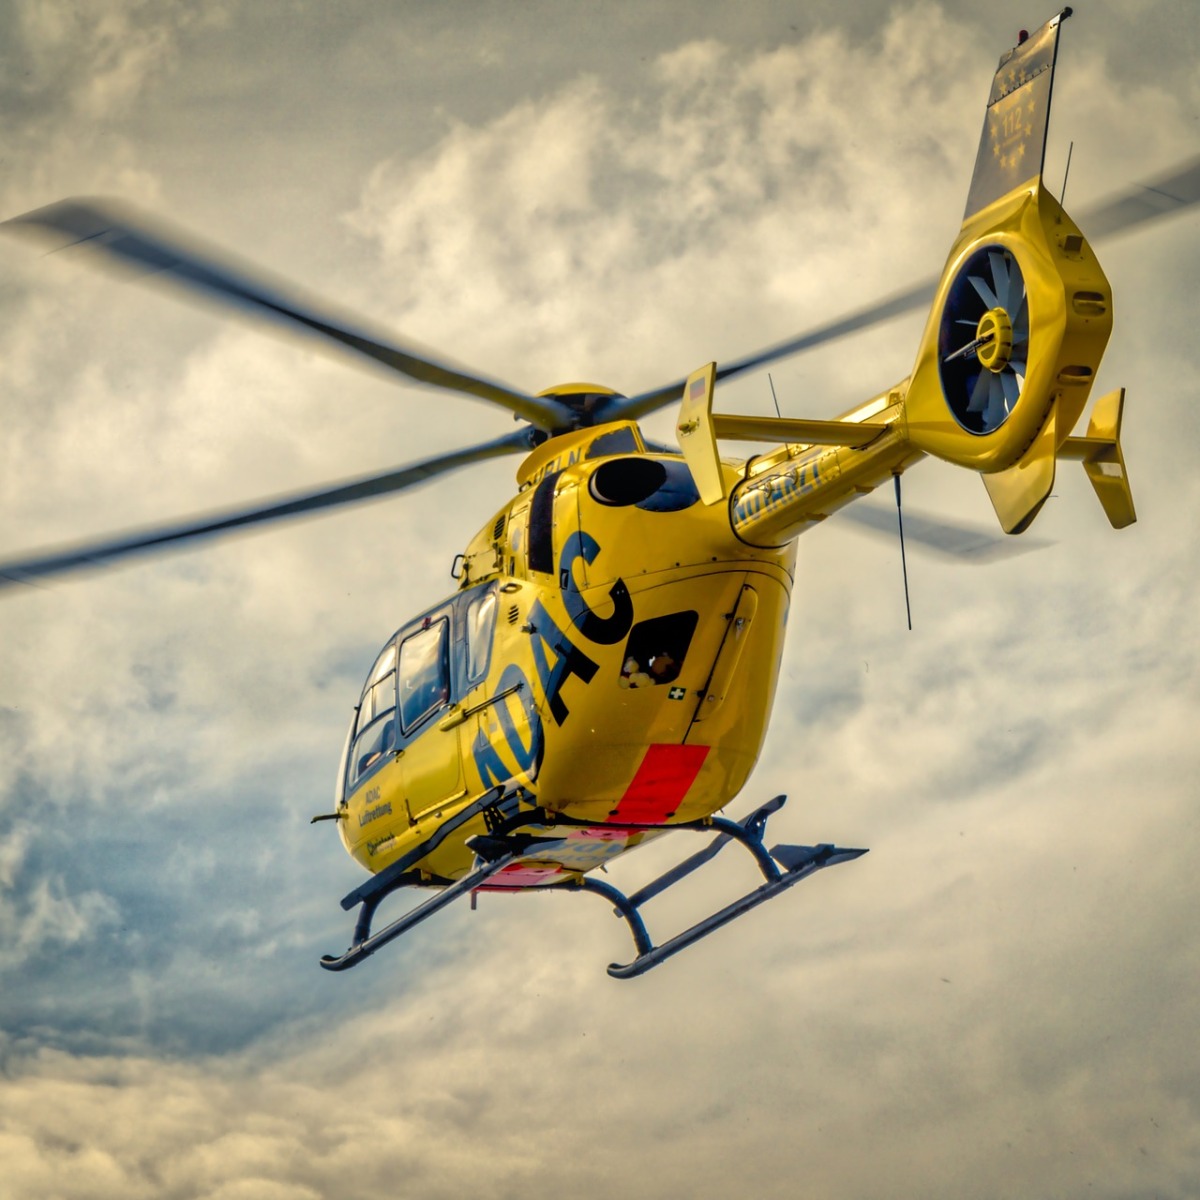 Telah Dievakuasi, Kamal: Helikopter Airfast Kecelakaan Murni